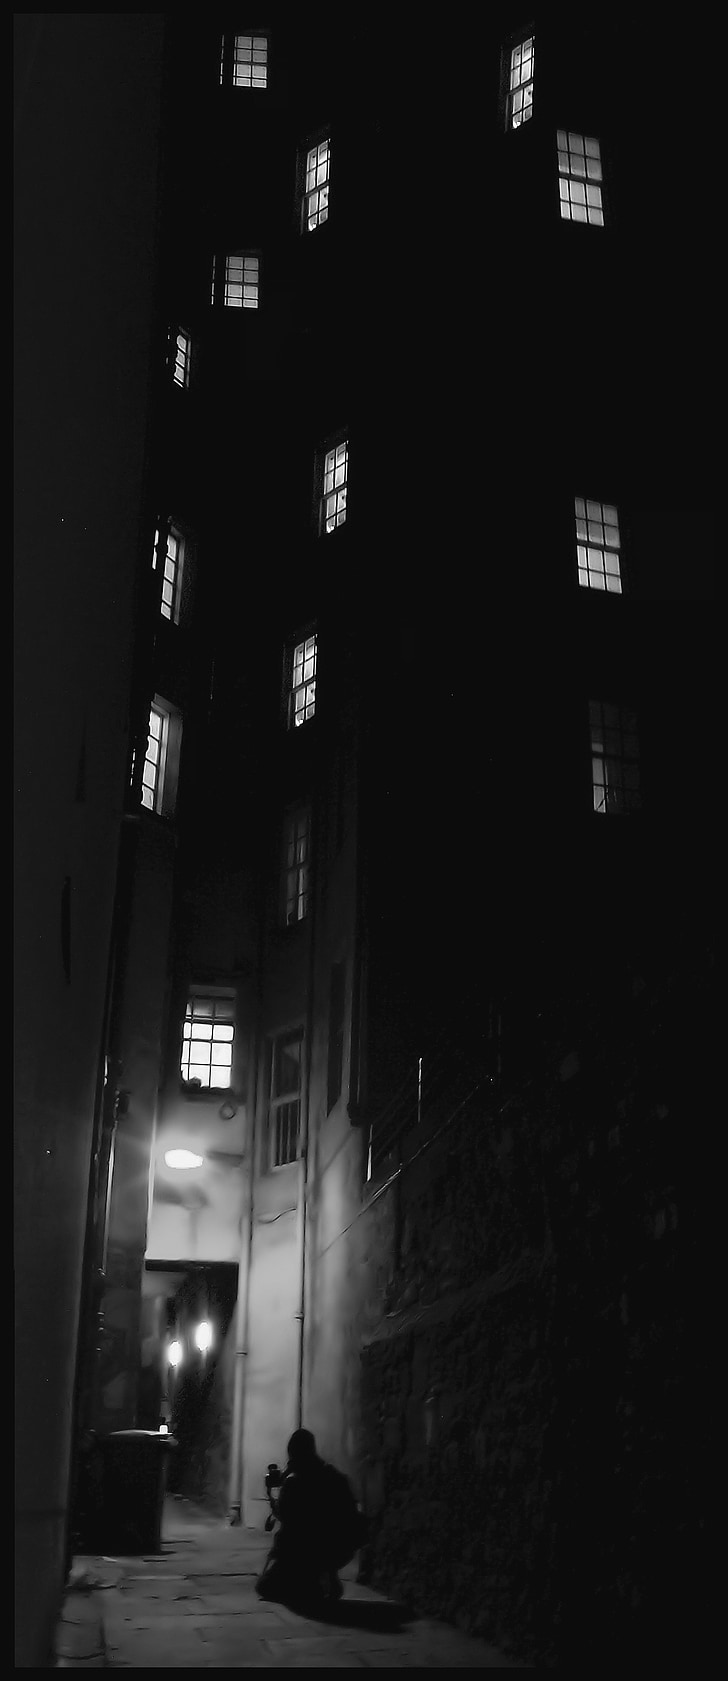 Lane, notte, architettura, scena urbana, bianco e nero, New york city, scuro